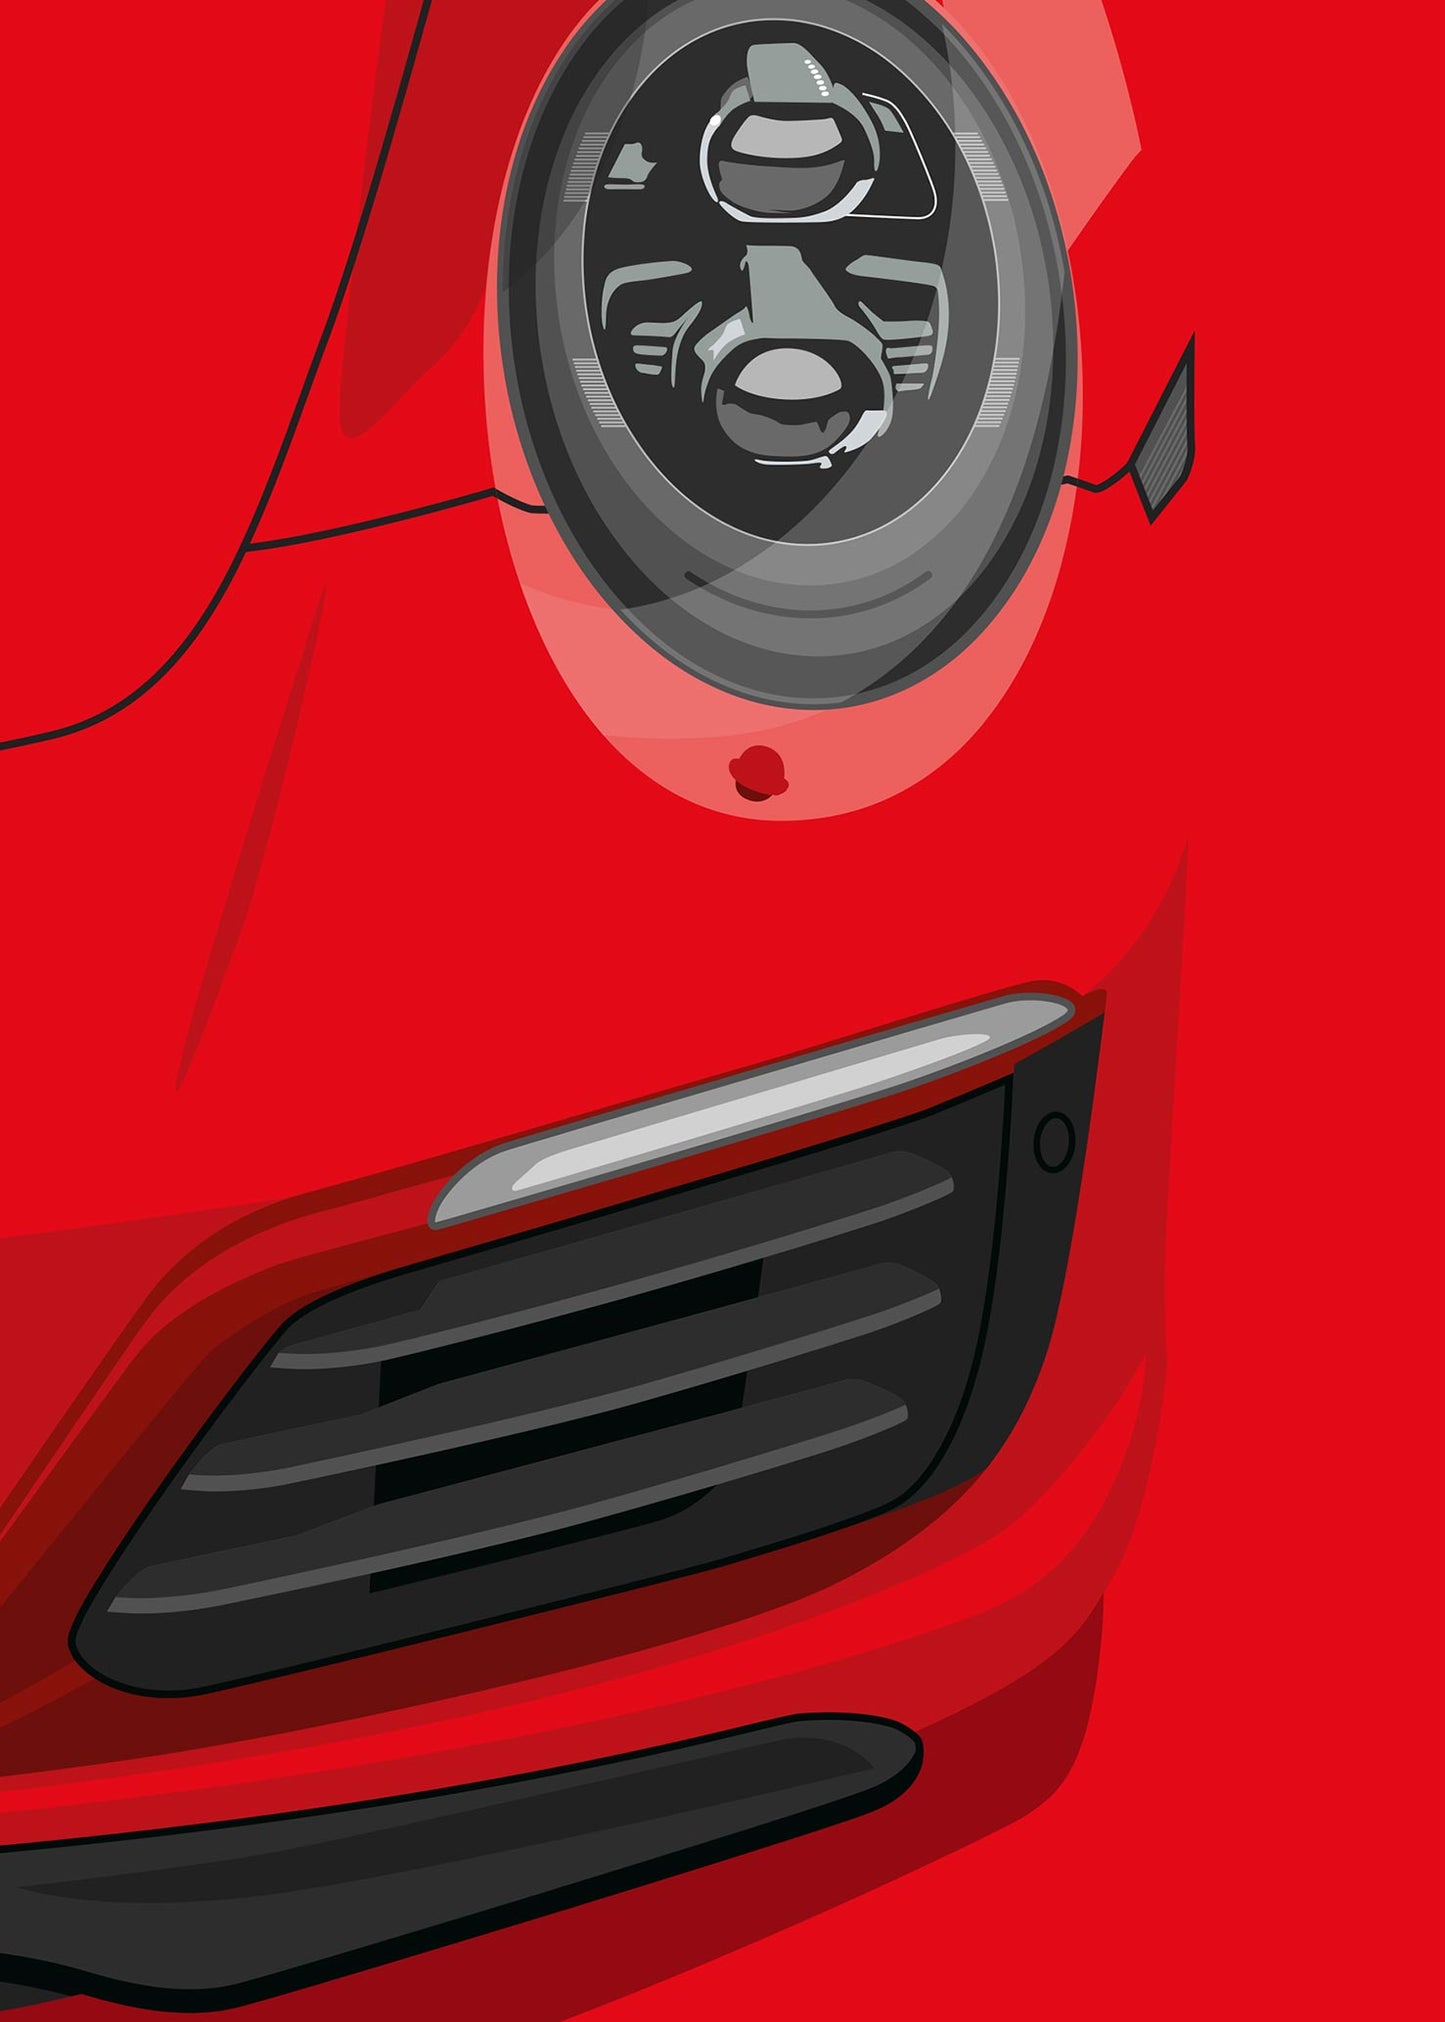 2017 Porsche 911 (991.2) Carrera T - Guards Red - poster print